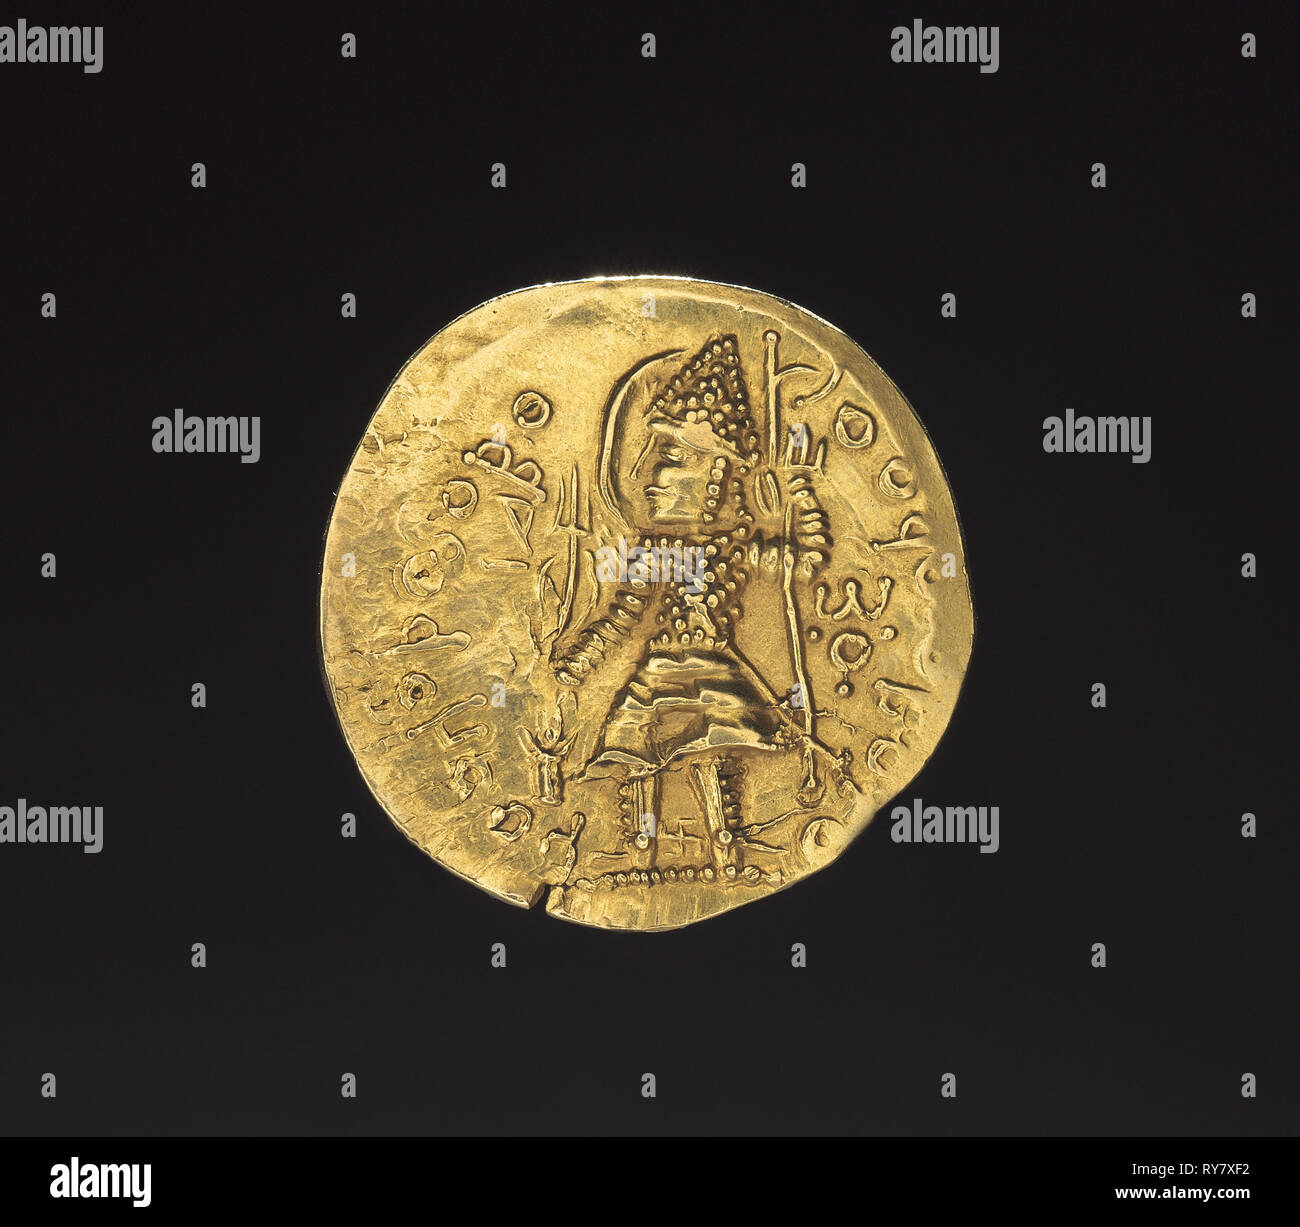 Dinar d'or, 200s. L'Inde, Vasudeva, Kushan II, 3e siècle. Or, diamètre : 2,4 x 0,1 cm (15/16 x 1/16 po Banque D'Images